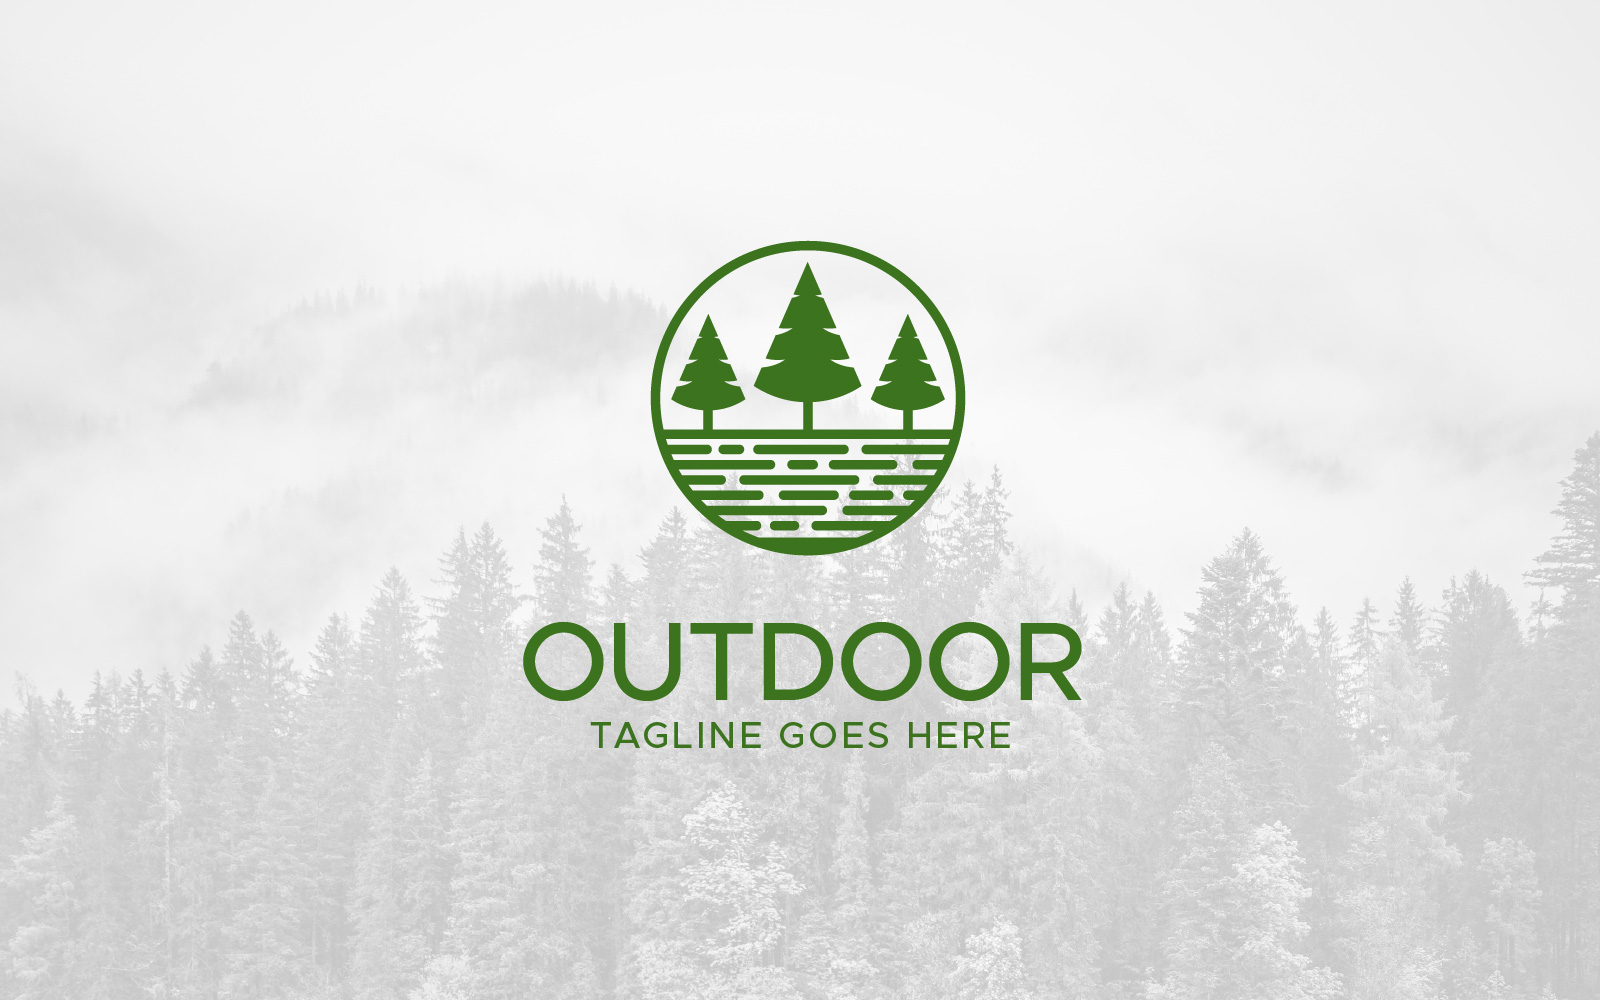 Outdoor landscape nature pine tree logo design template